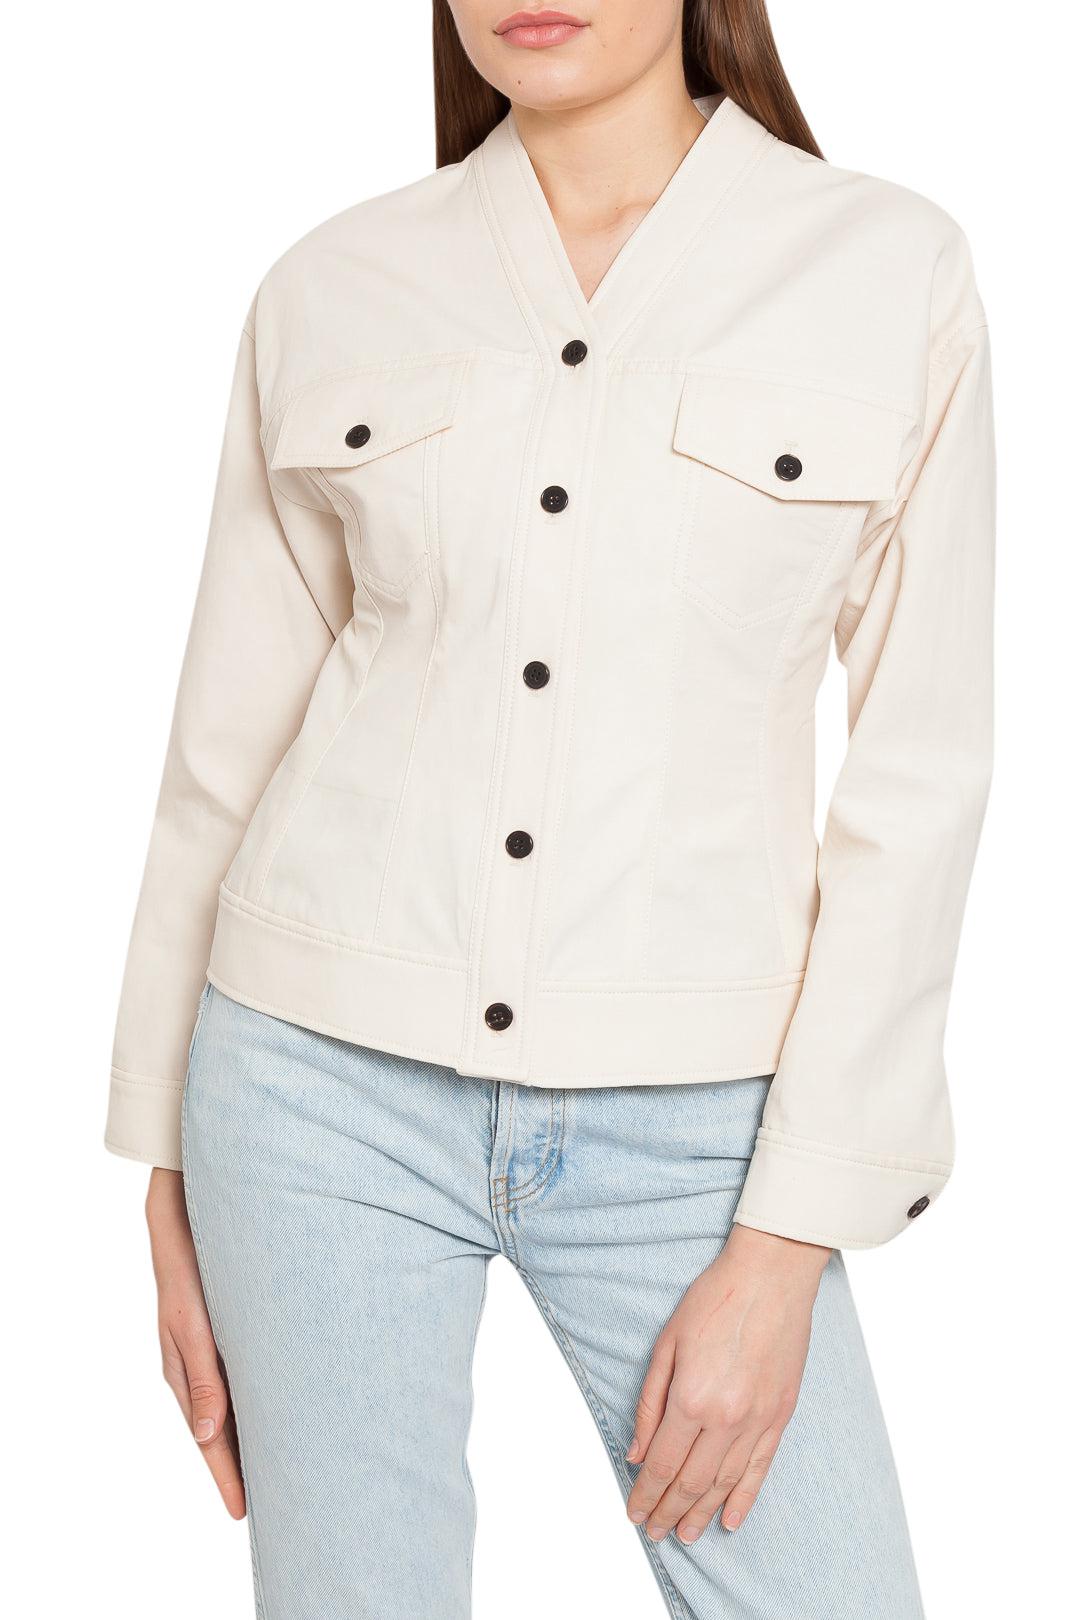 Lvir-Linen and cotton jacket-LV21S-JK04-white-dgallerystore